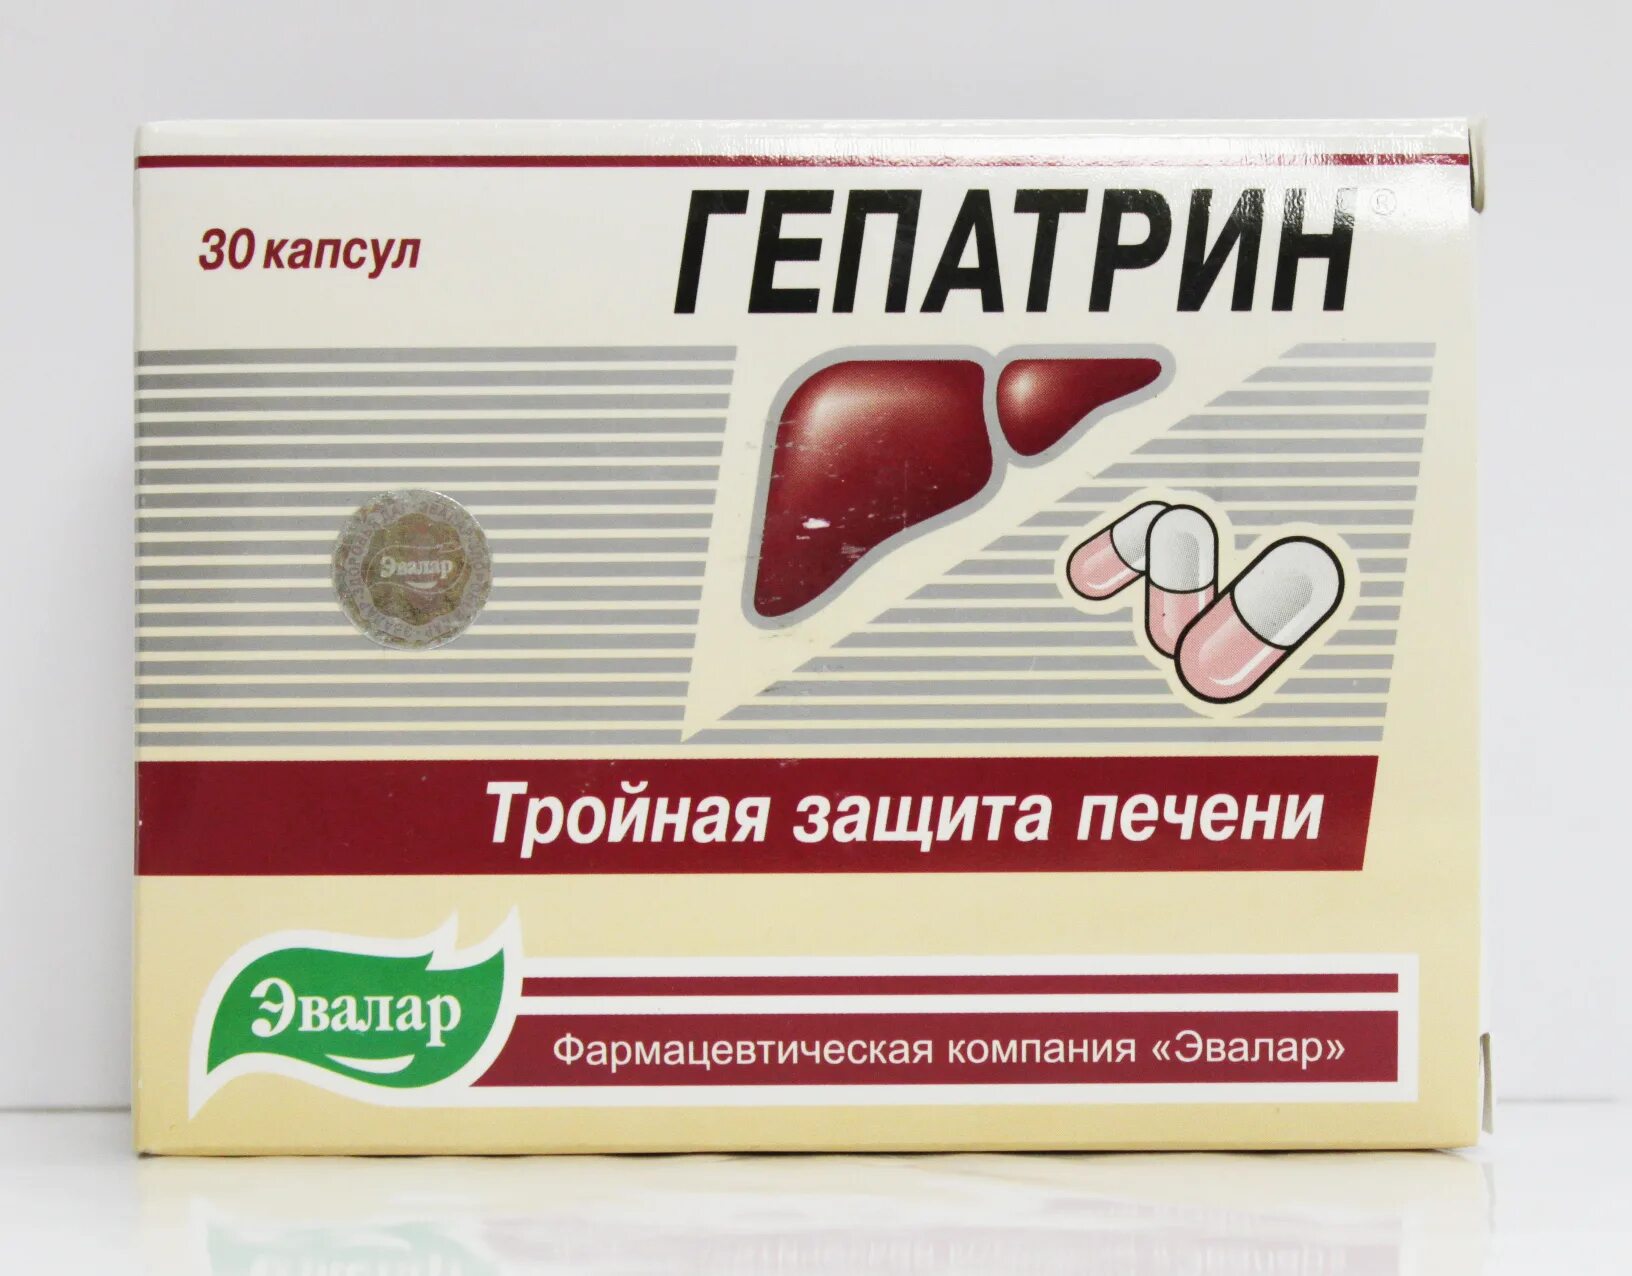 Гепатрин Эвалар 30 капсул. Гепатрин 4602242002185. Гепатрин 400 мг. Таблетки от печени Гепатрин.